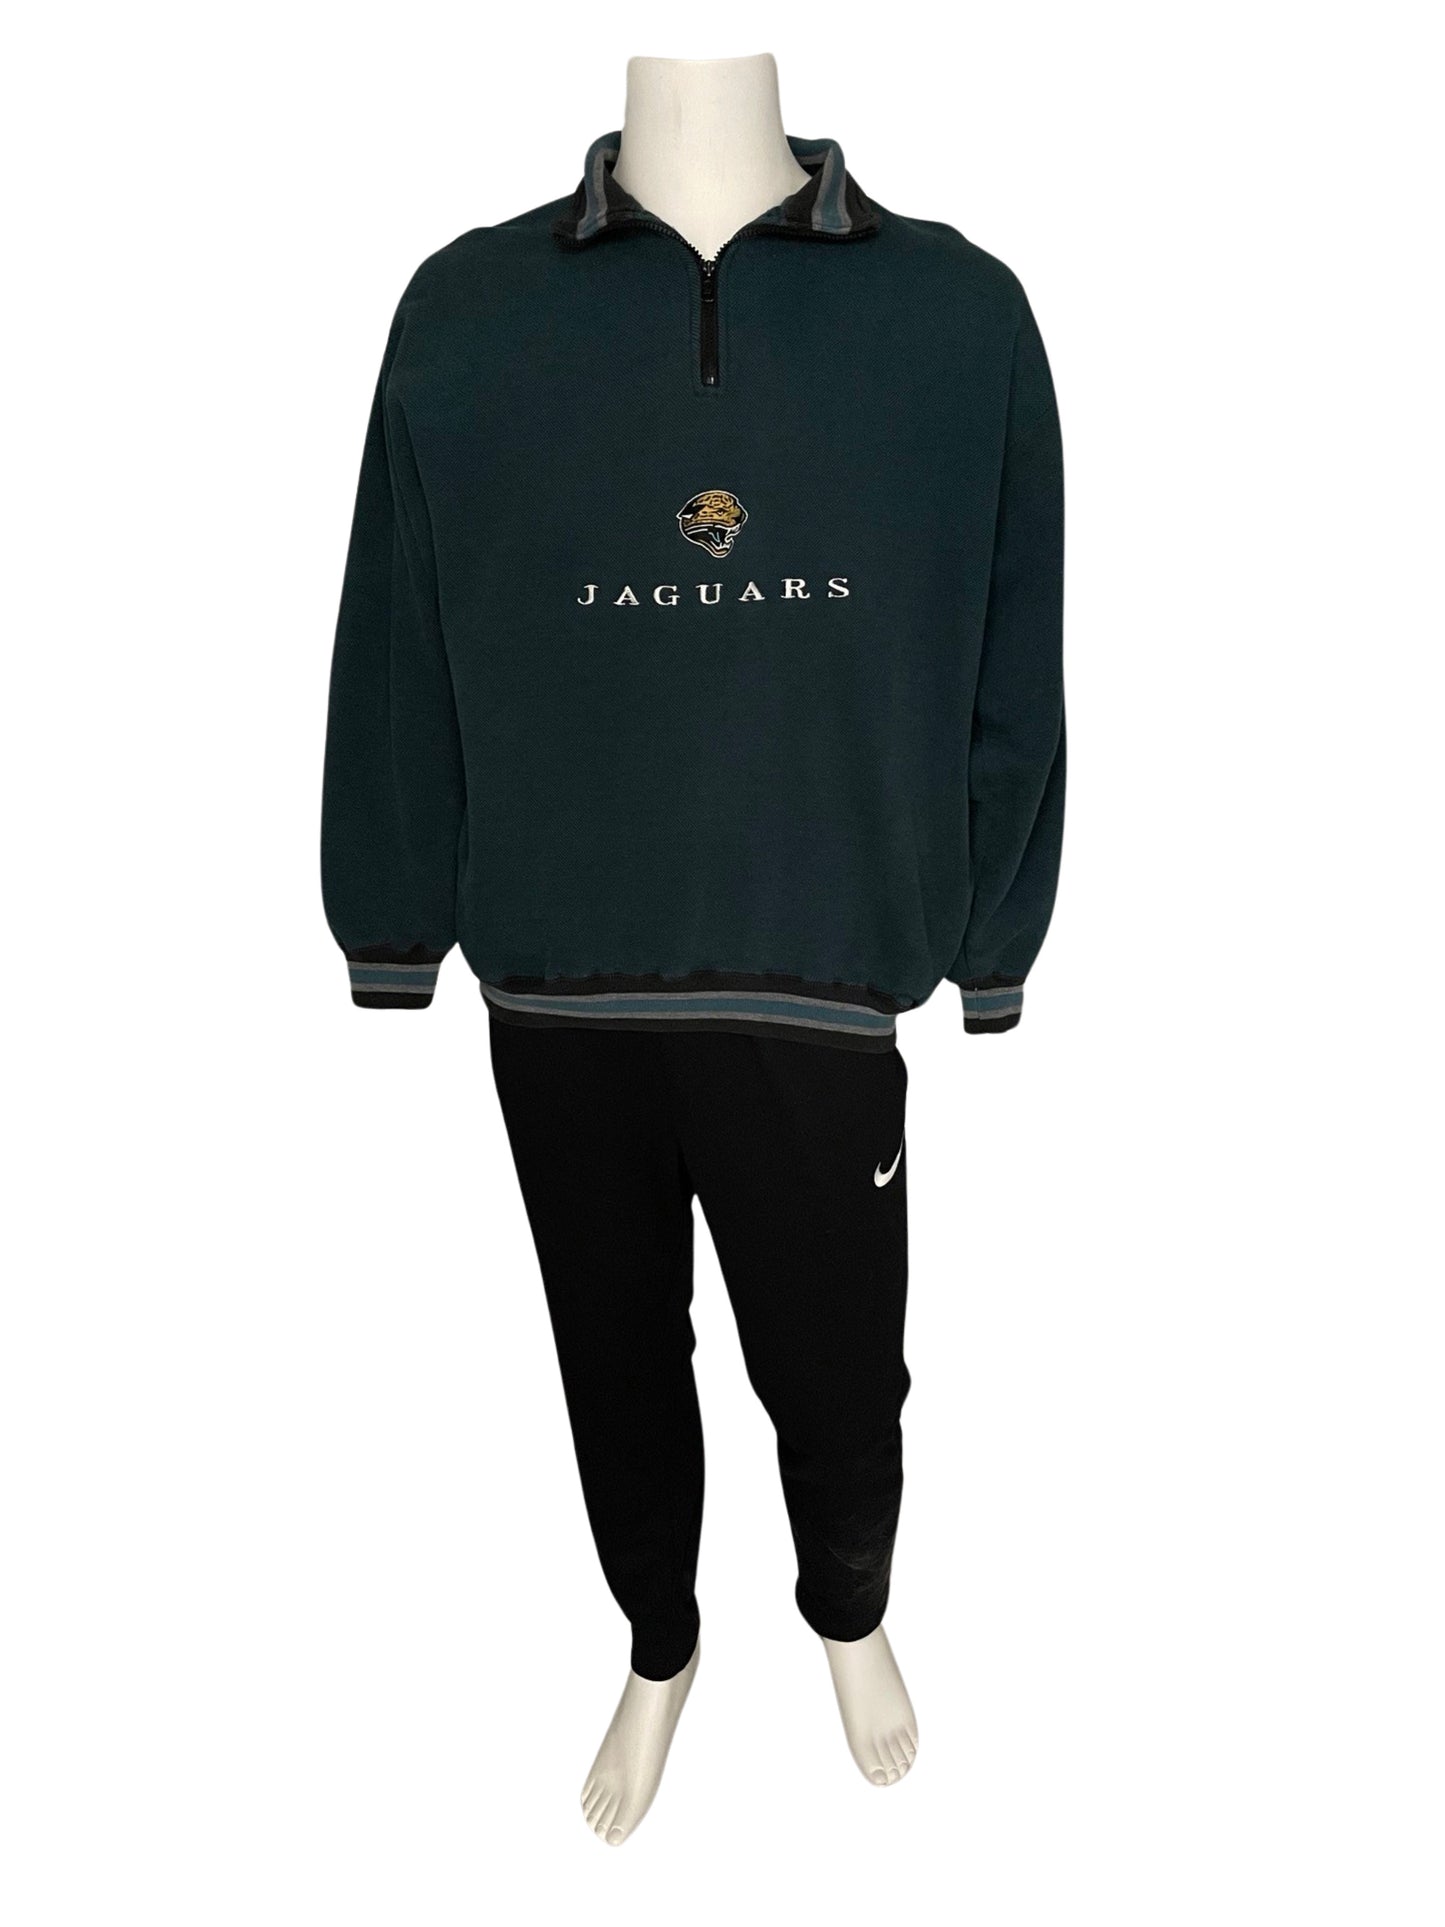 Vintage Jacksonville Jaguars quarter zip sweatshirt size LARGE